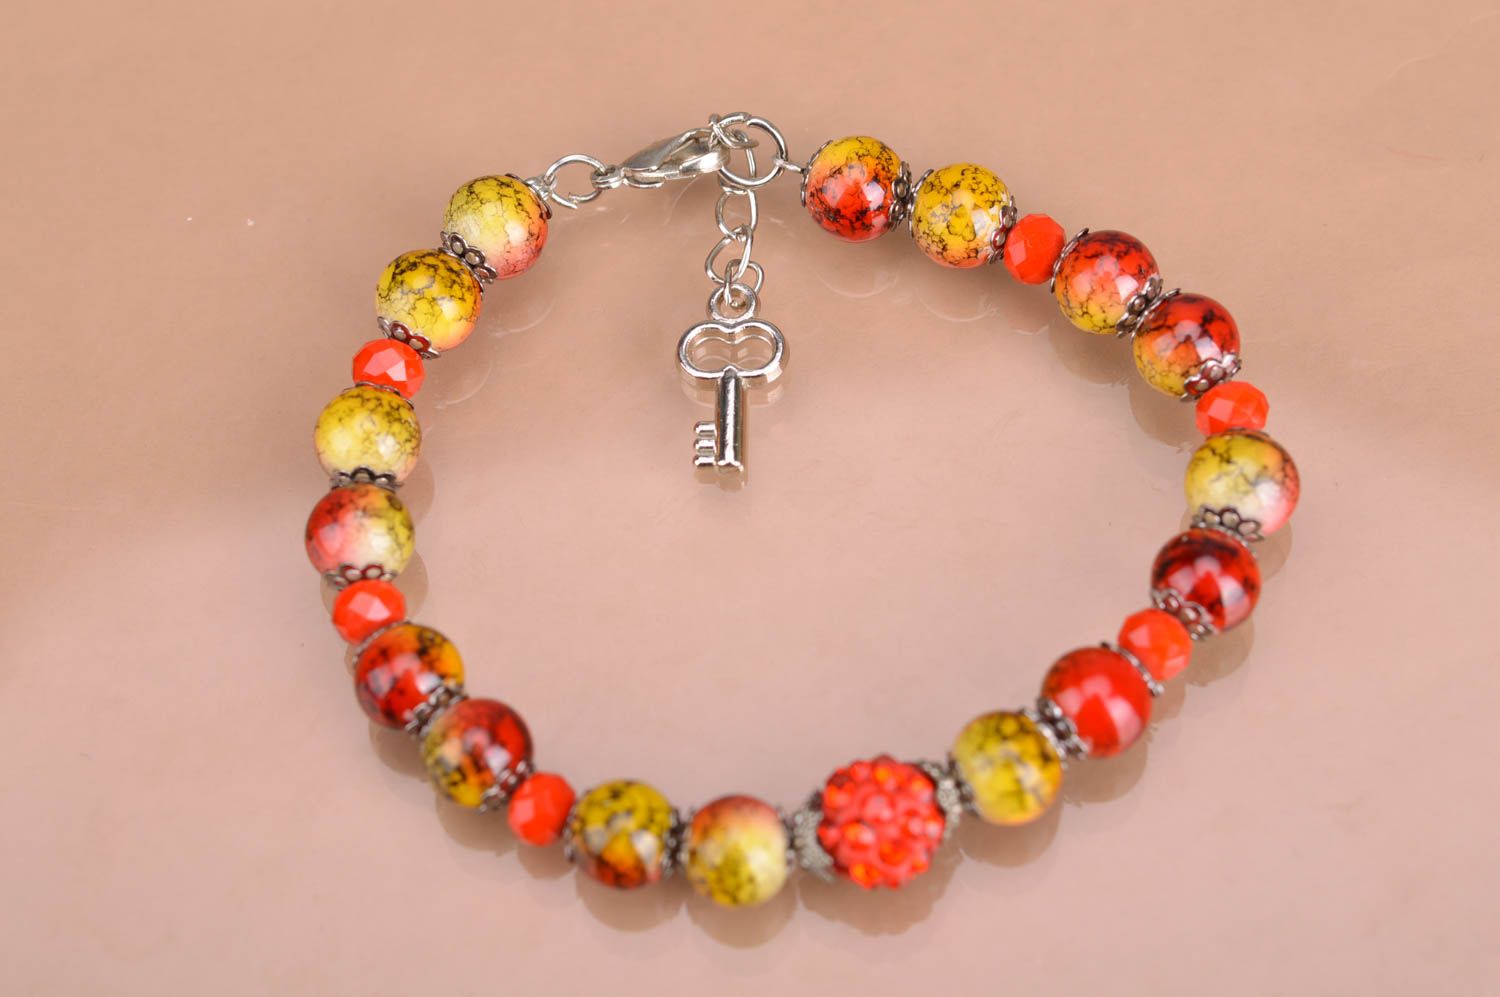 Handmade colorful glass bead wrist bracelet with metal charm key for women photo 2